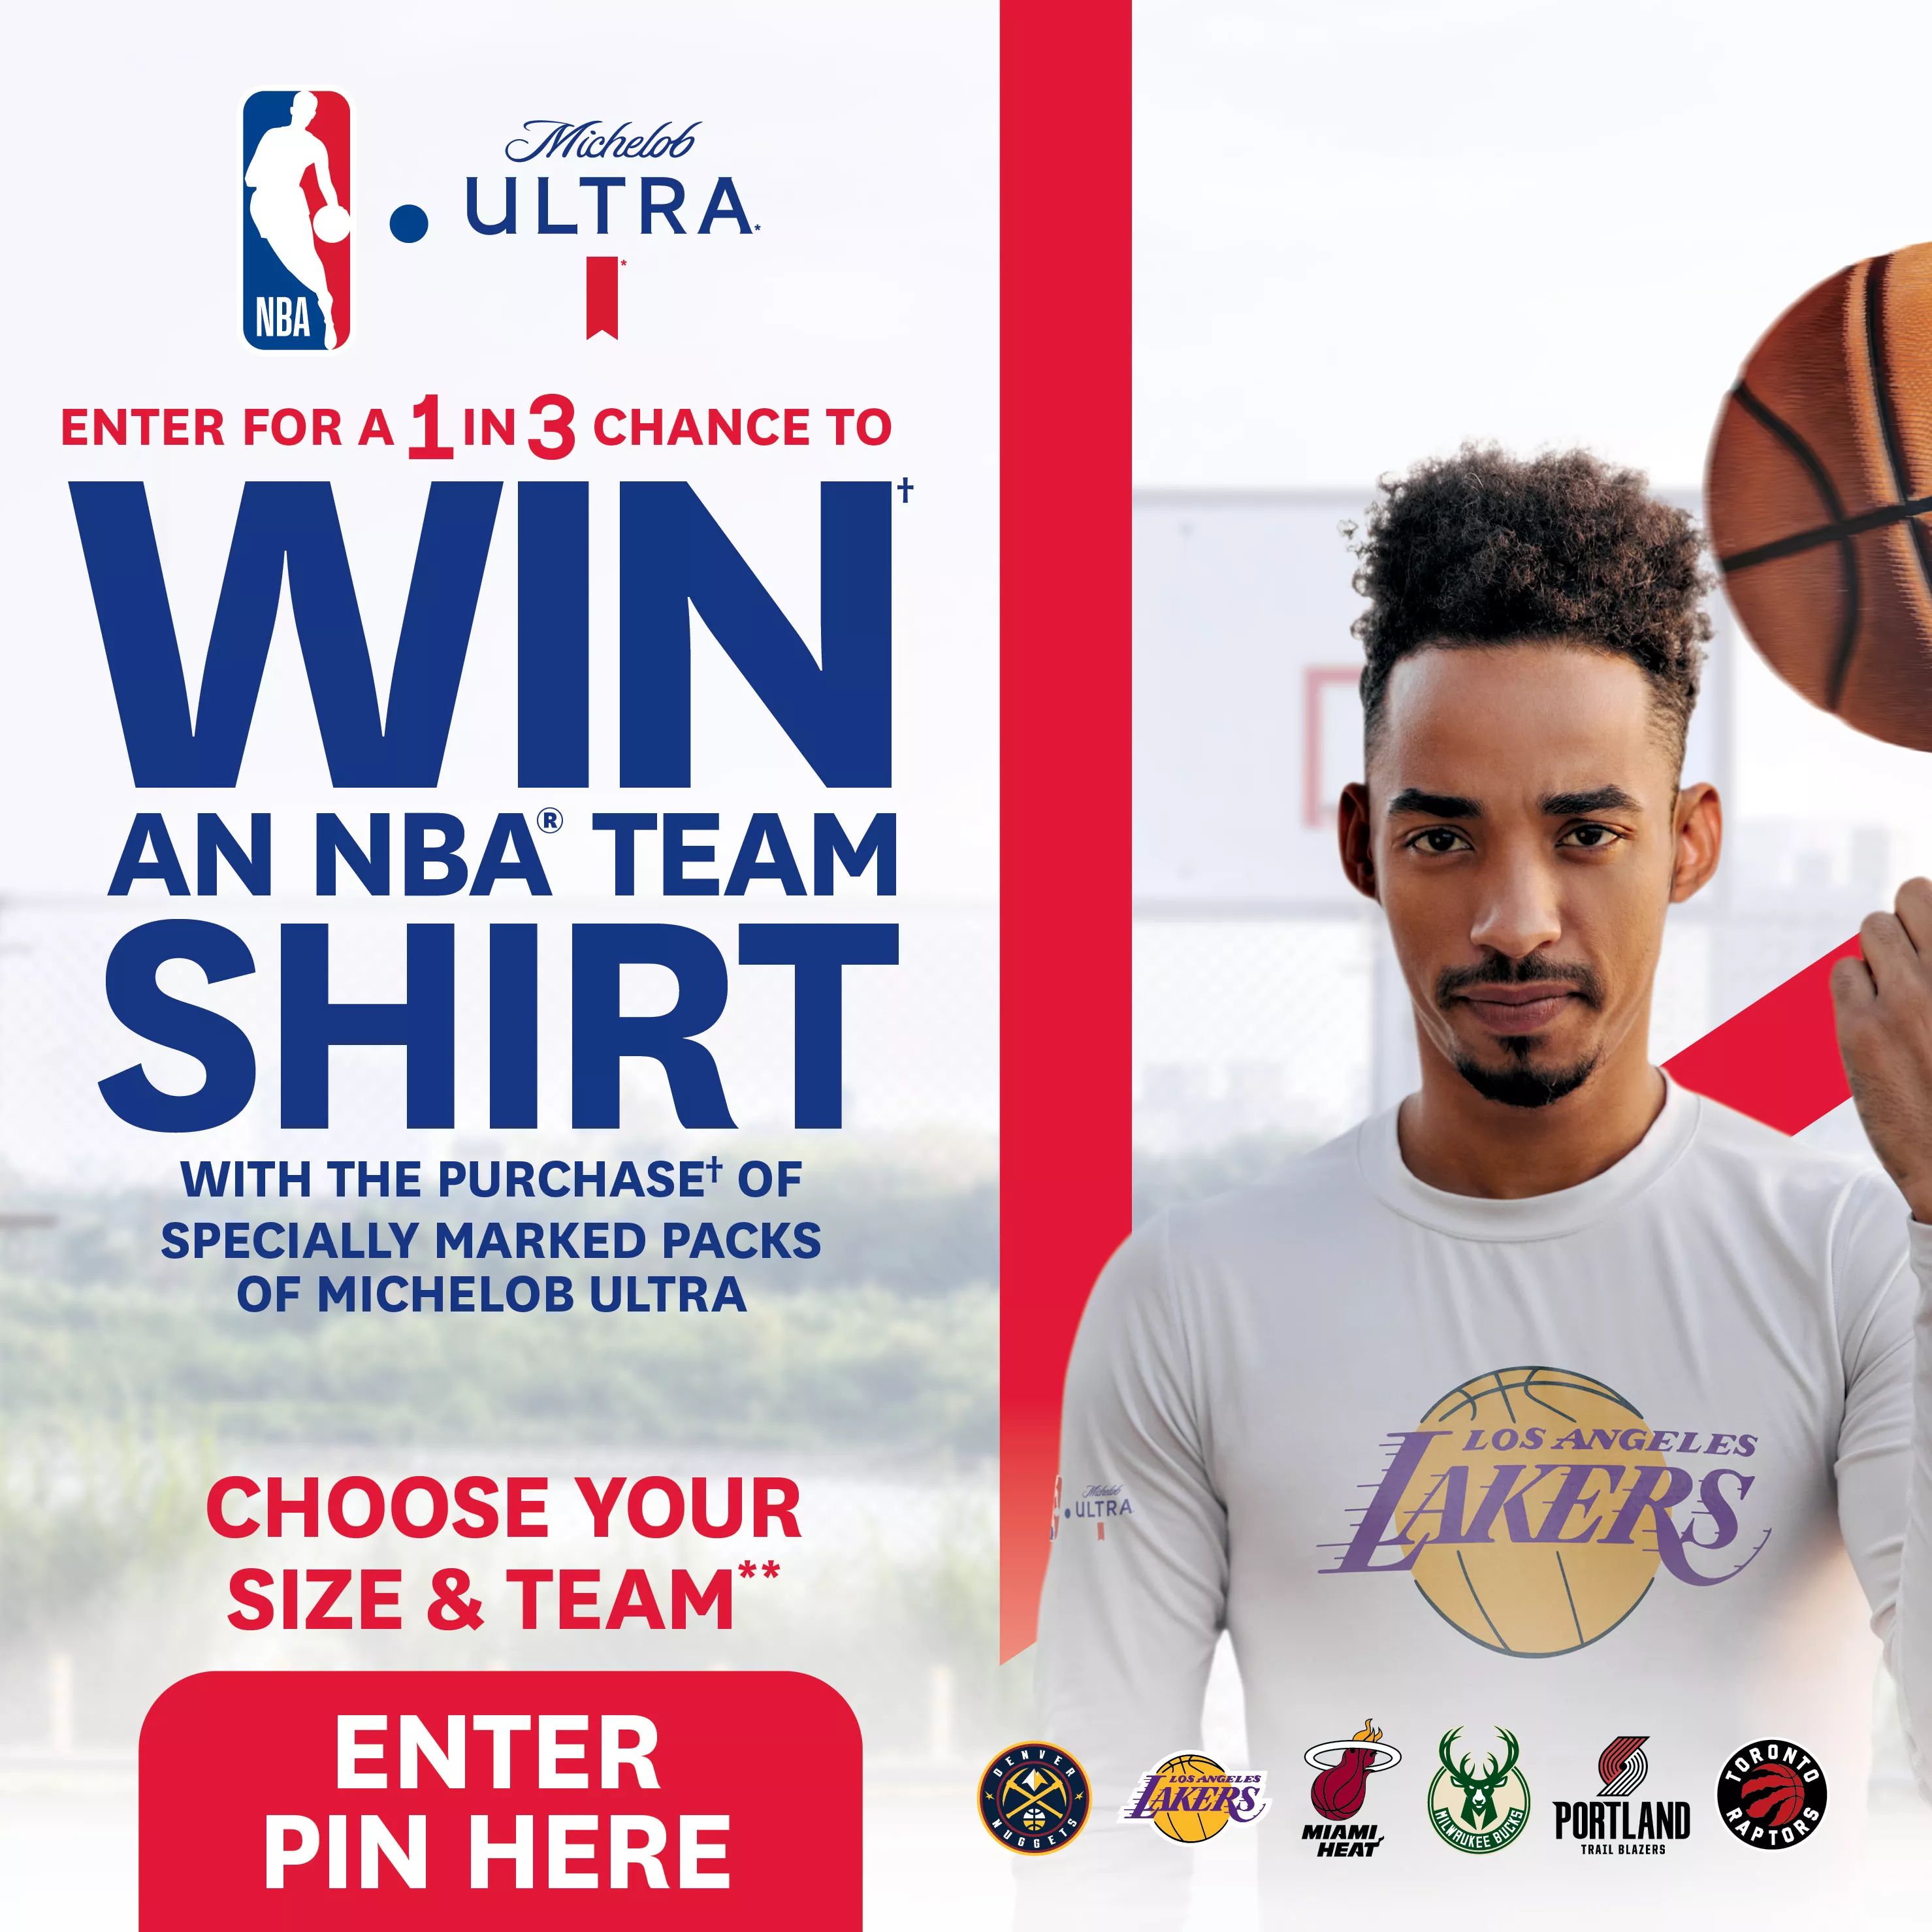 Enter to win a Michelob Ultra NBA team shirt